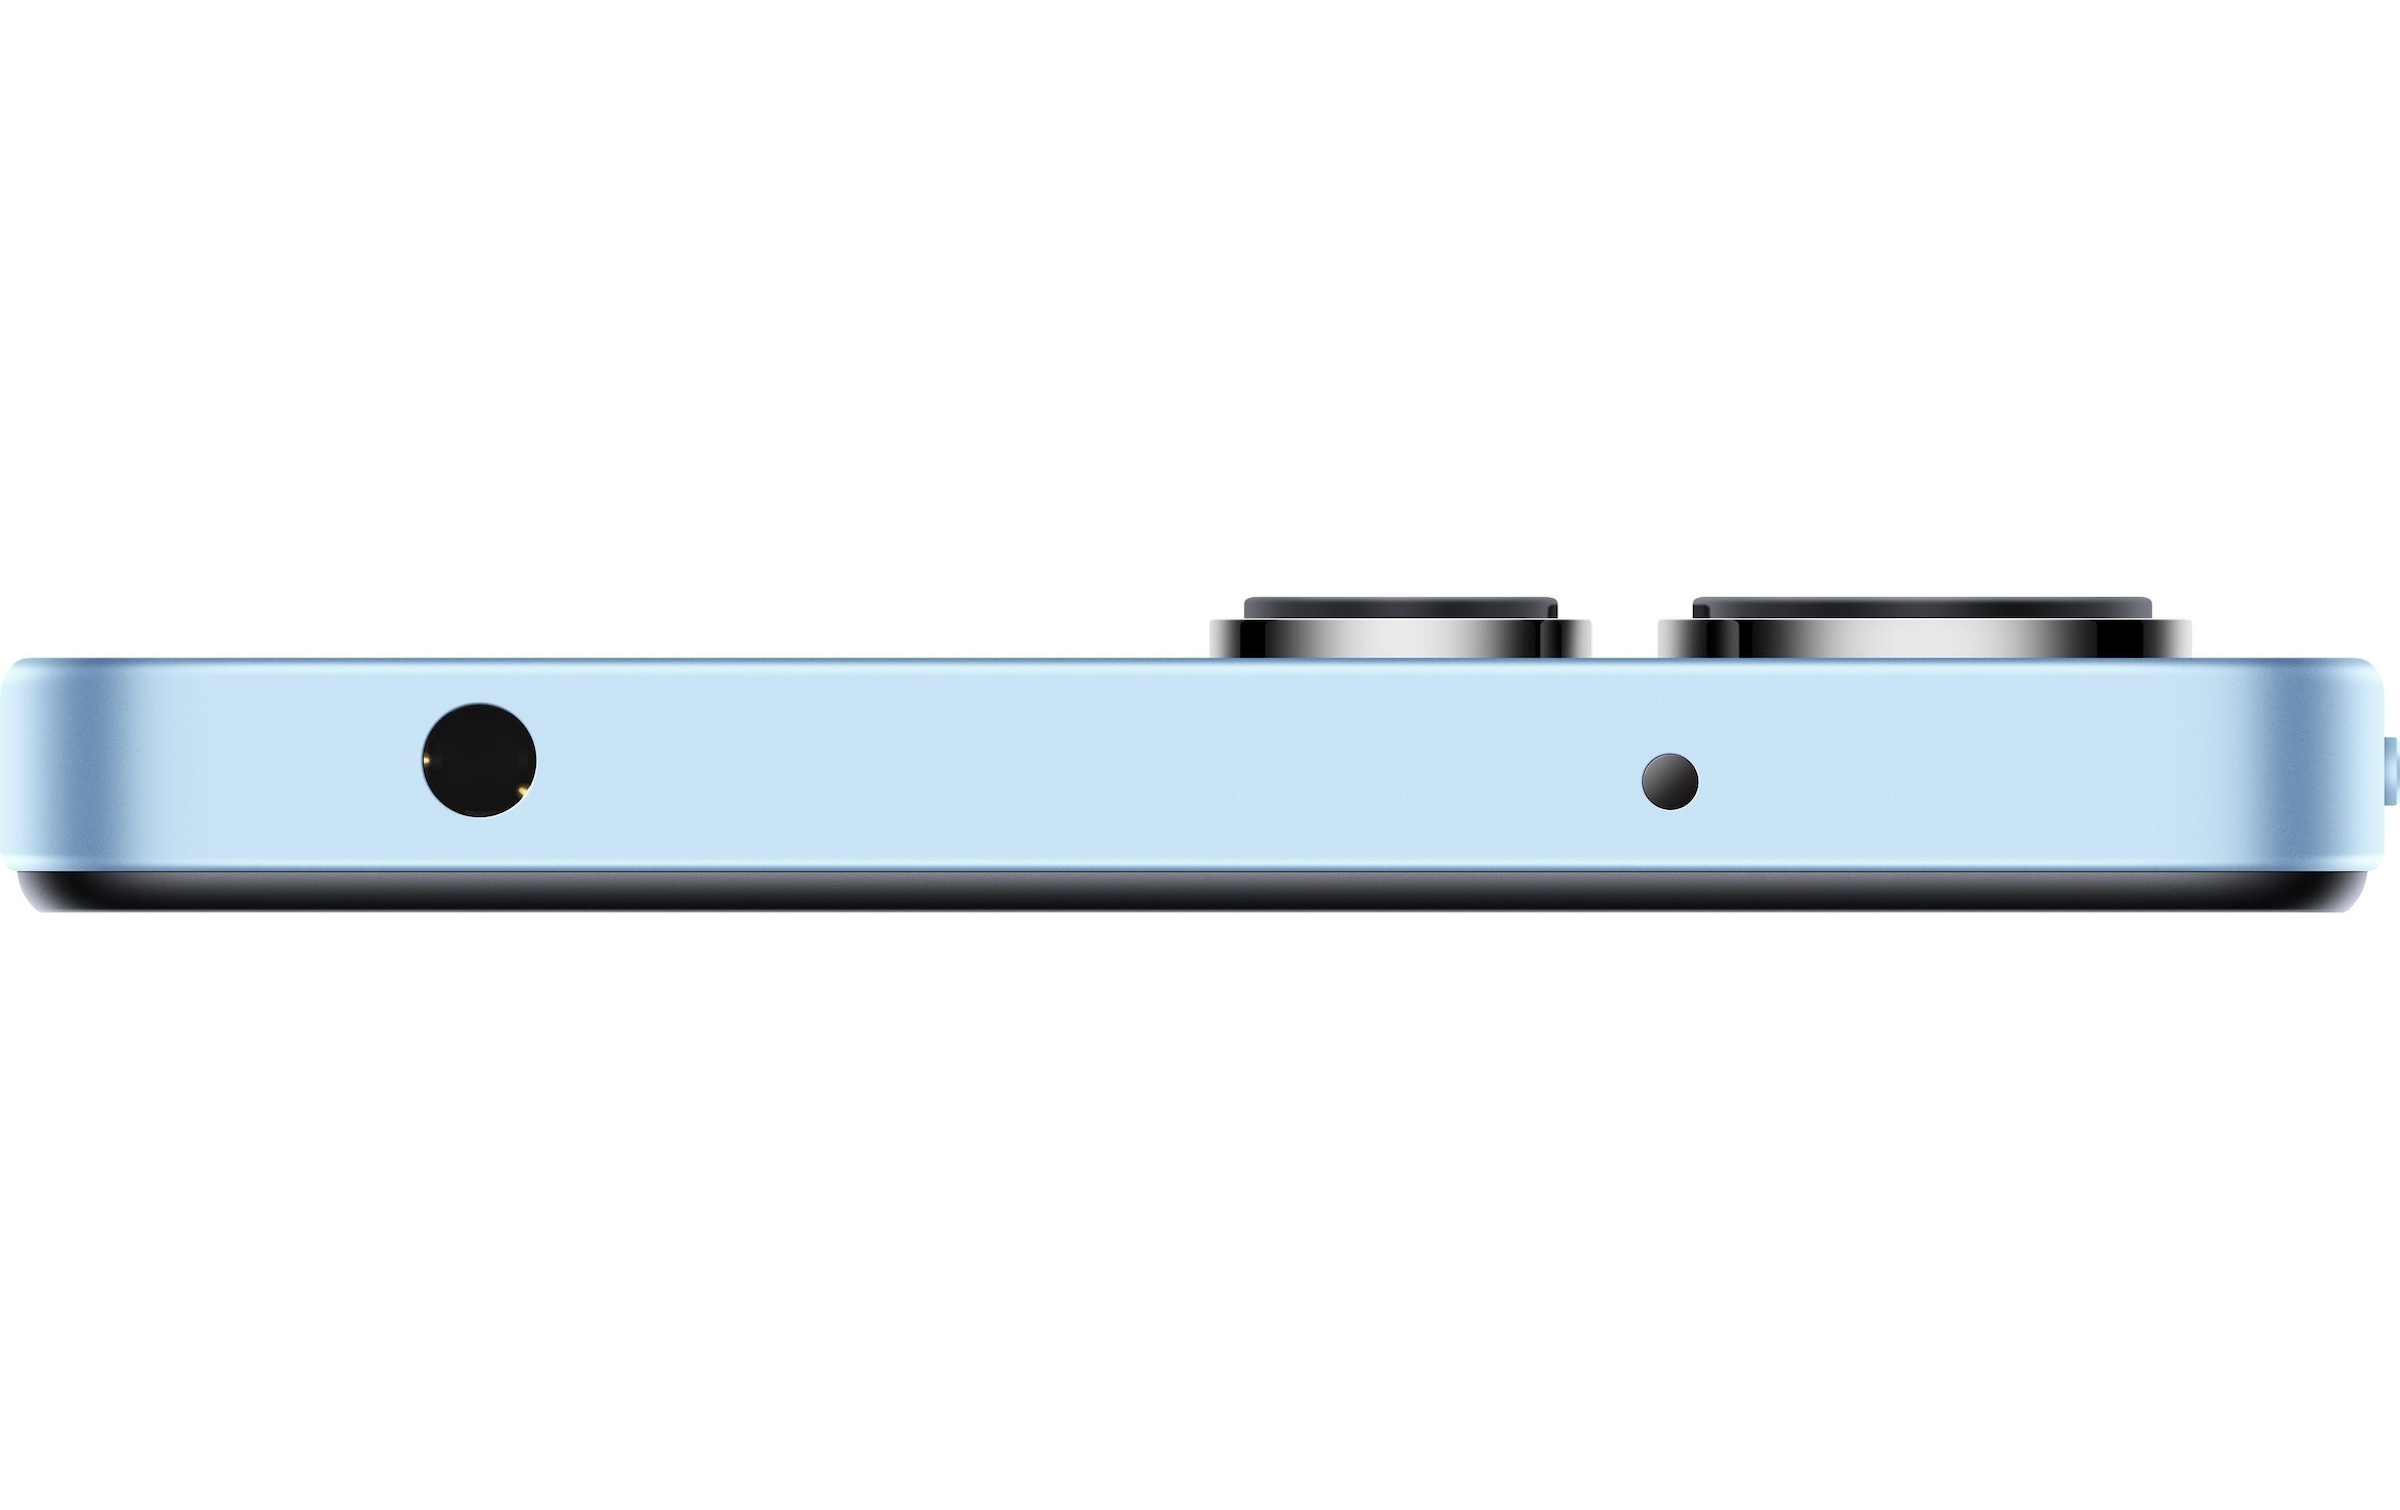 Xiaomi Smartphone »Redmi 12 128 GB Sky blue«, Blau, 17,18 cm/6,79 Zoll, 128 GB Speicherplatz, 50 MP Kamera